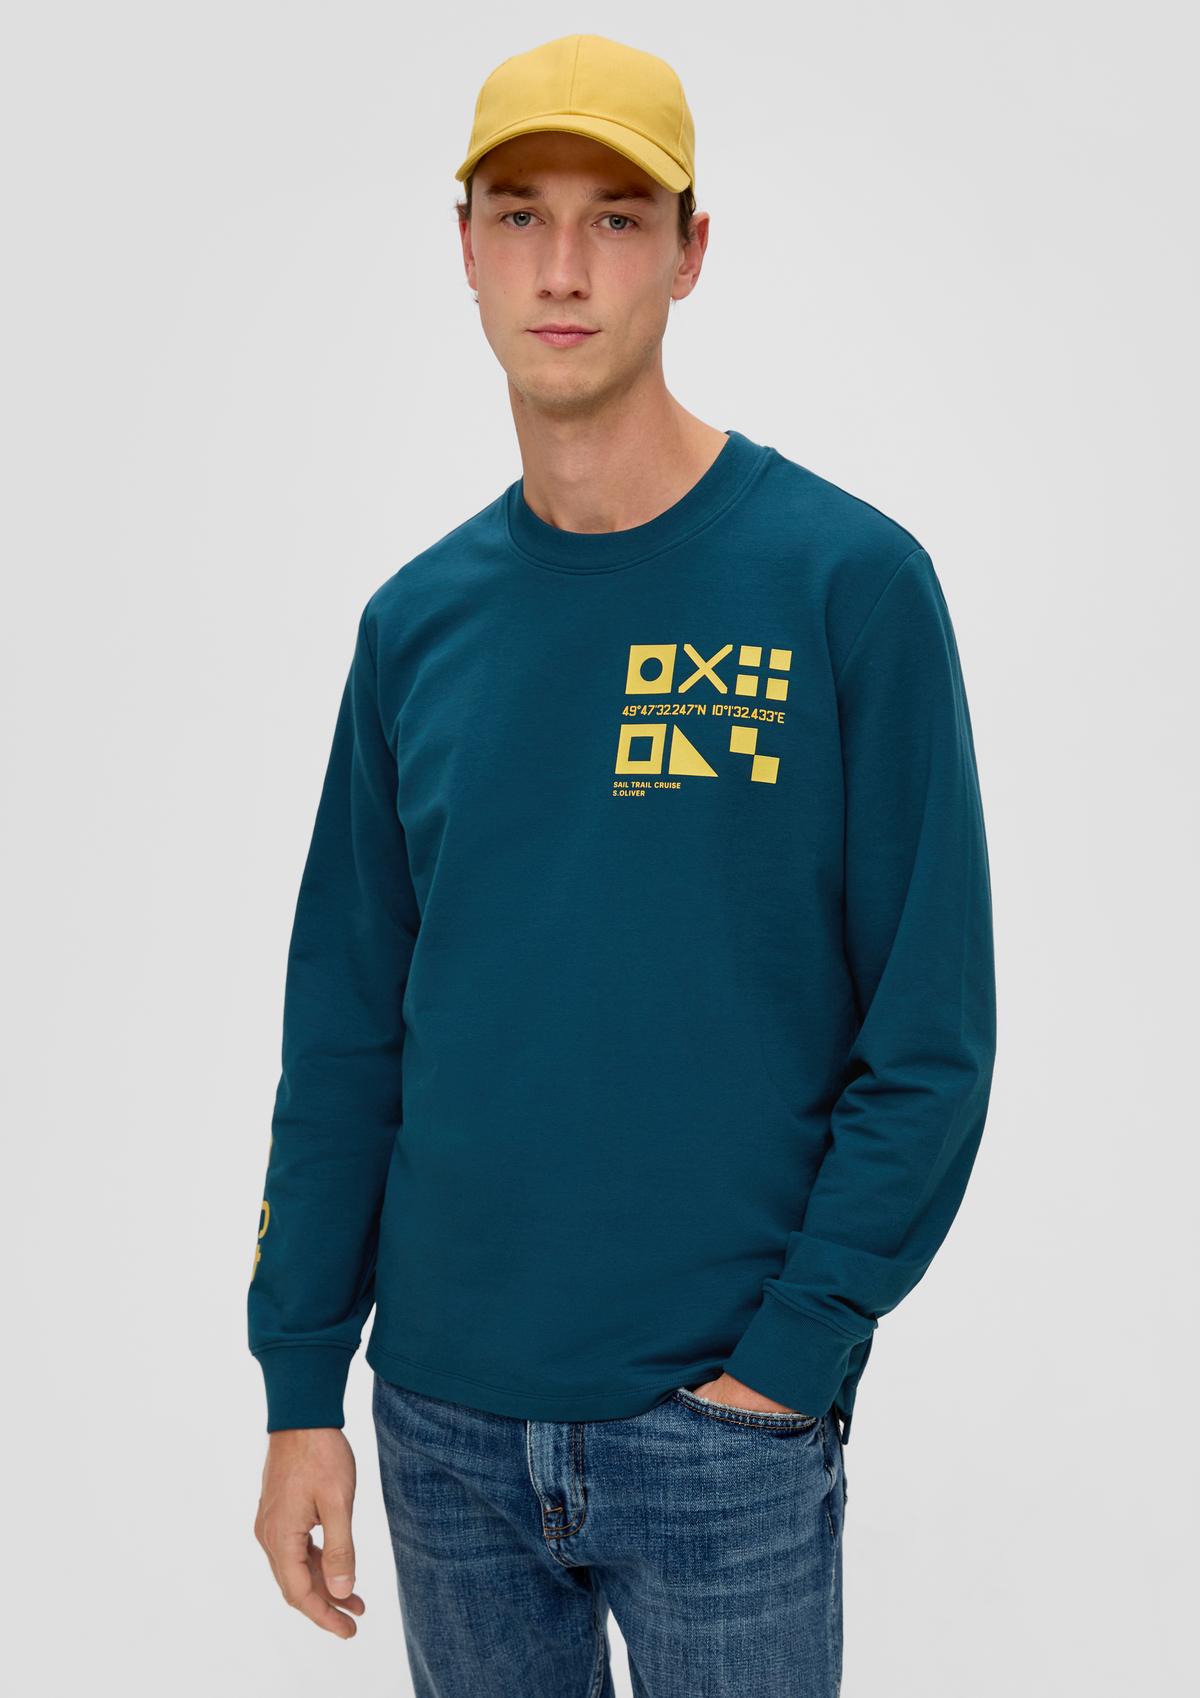 Sweatshirt with a logo detail - cream